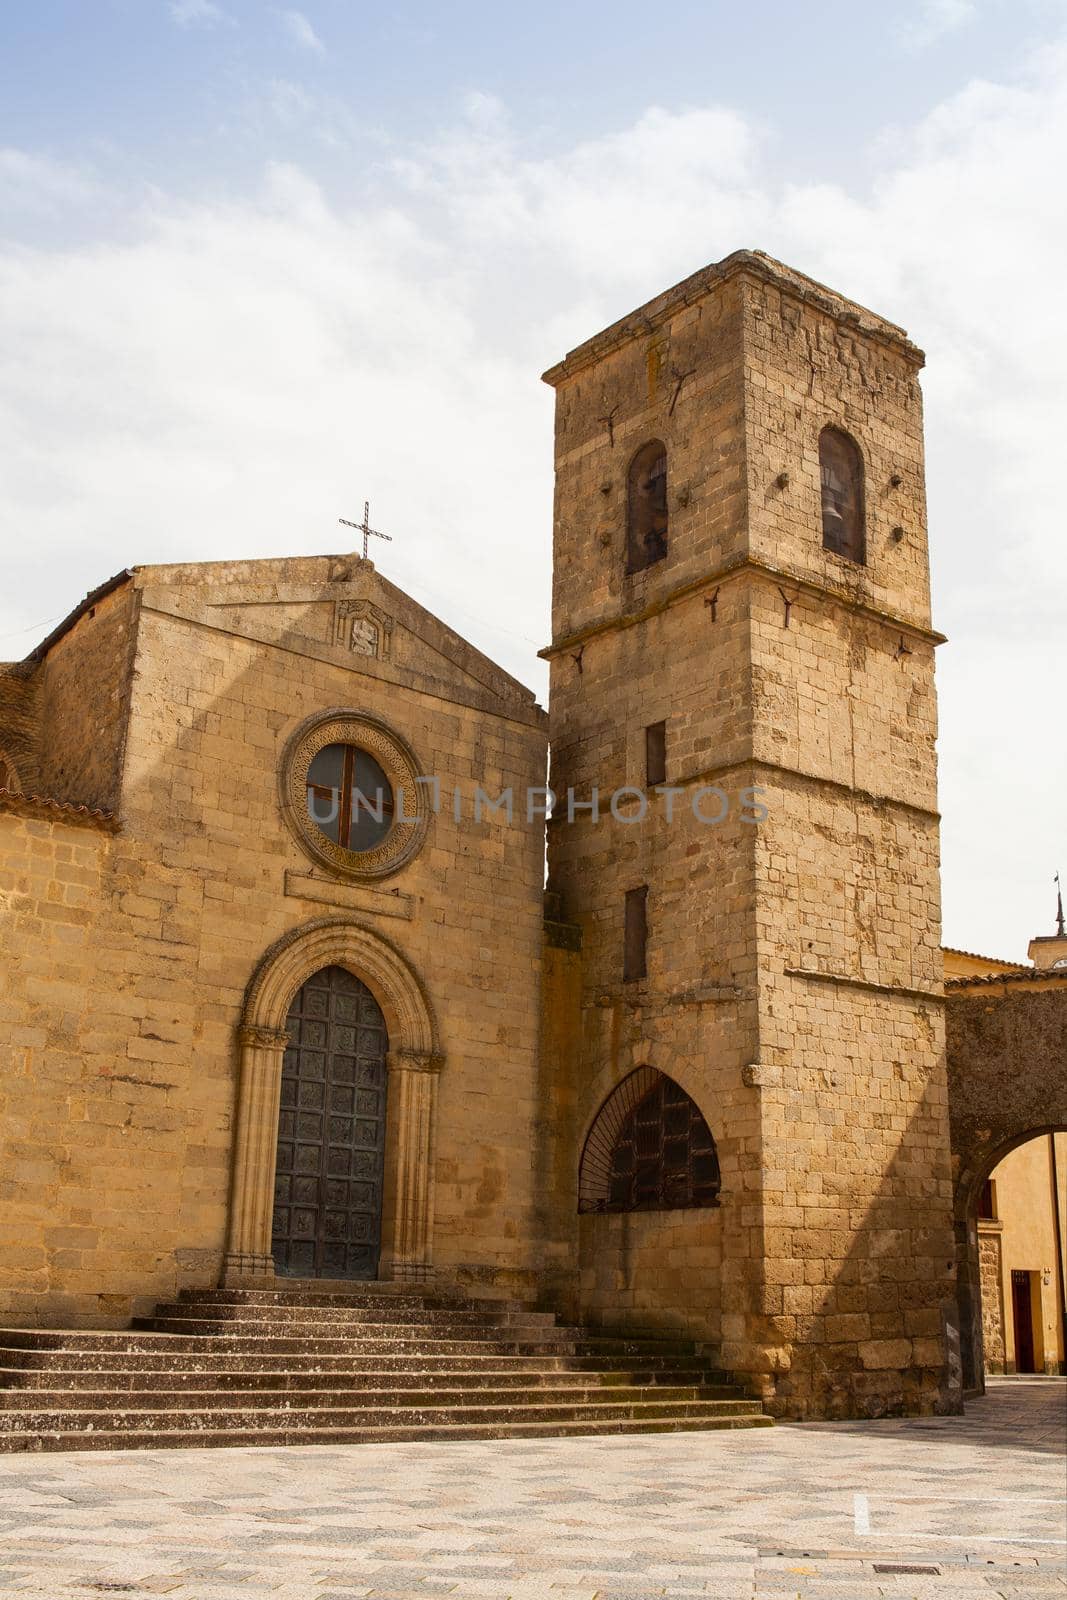 View of the San Leone Basilica of Assoro, Sicily. Italy